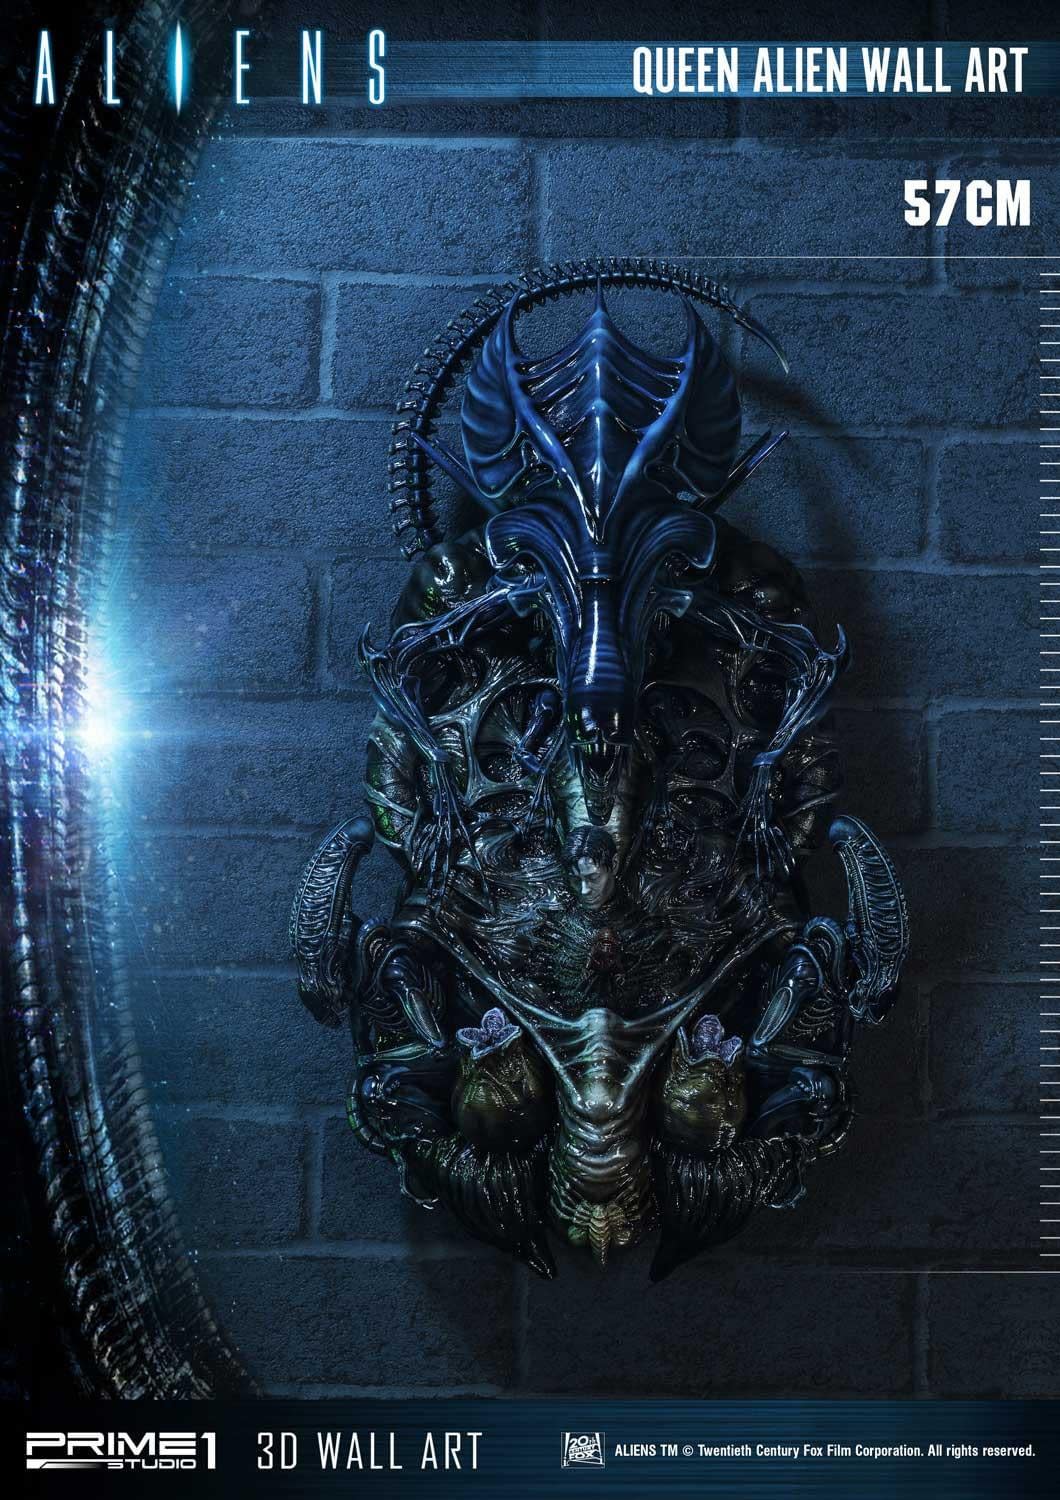 Alien Queen Wall Art Unveiled by Prime 1 Studio